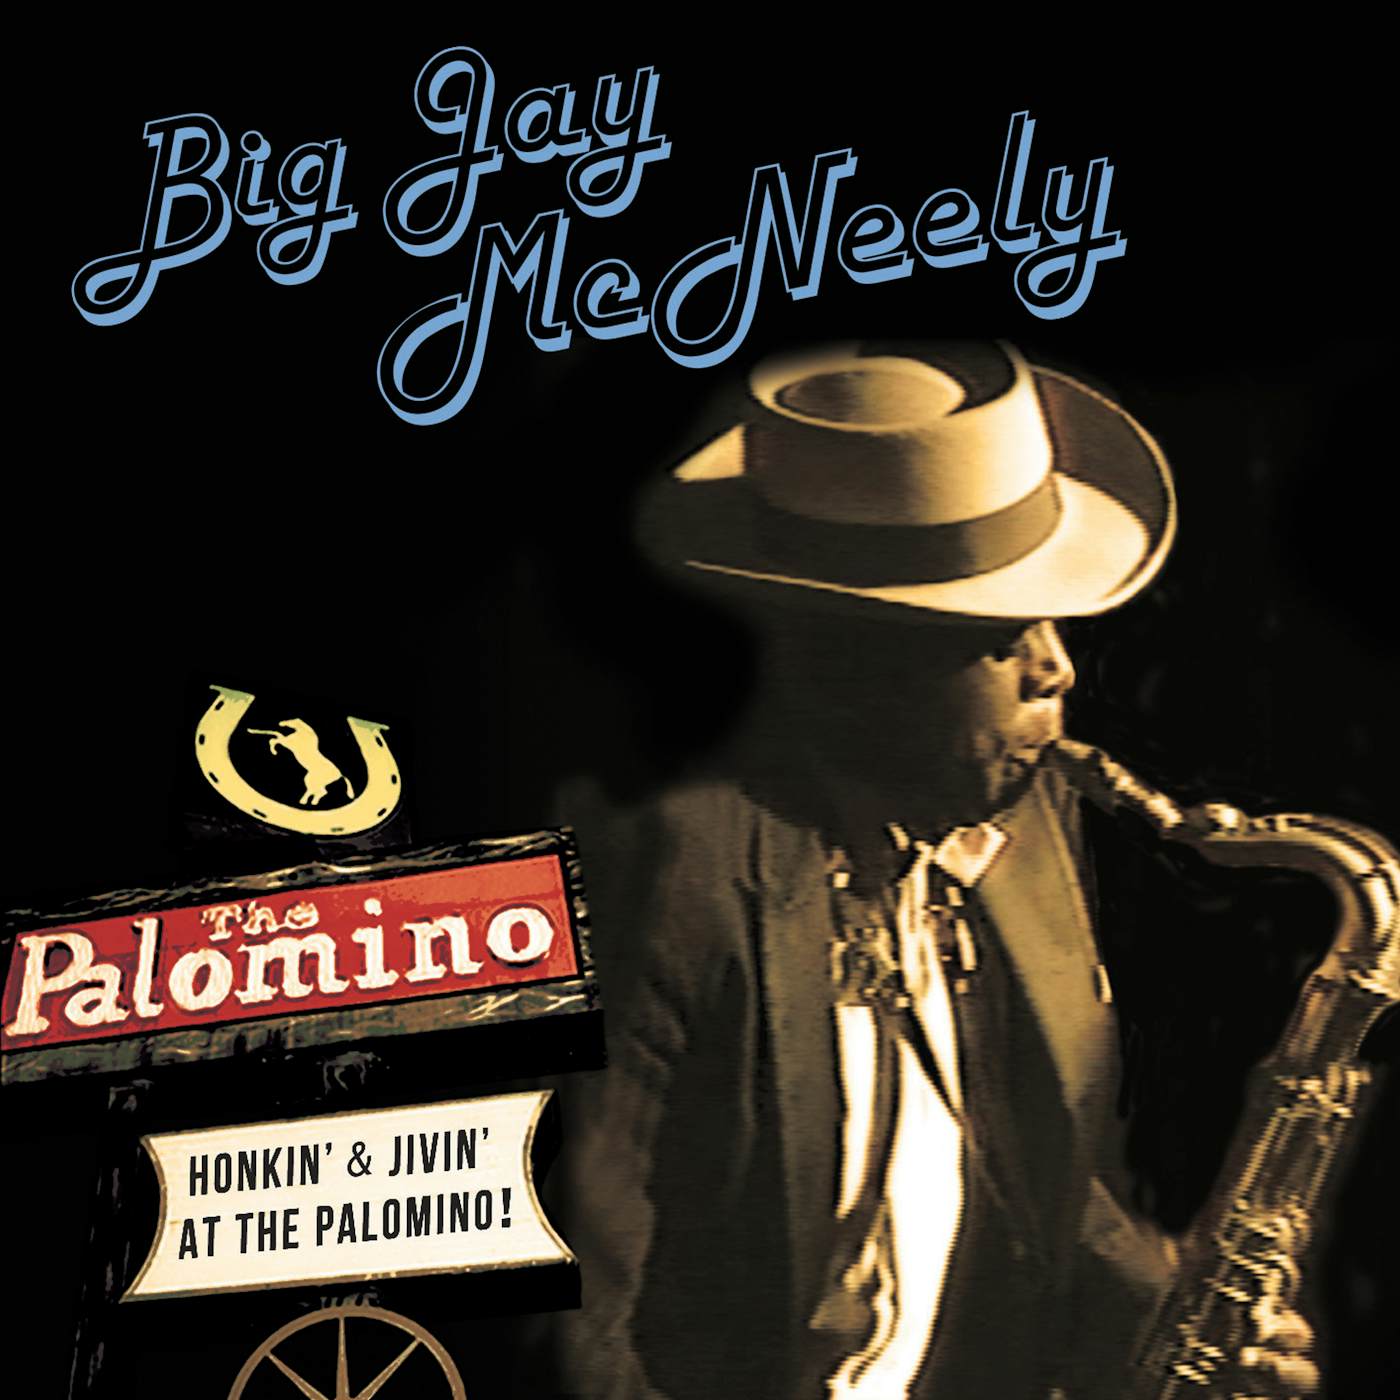 Big Jay McNeely HONKIN' & JIVIN' AT THE PALOMINO CD